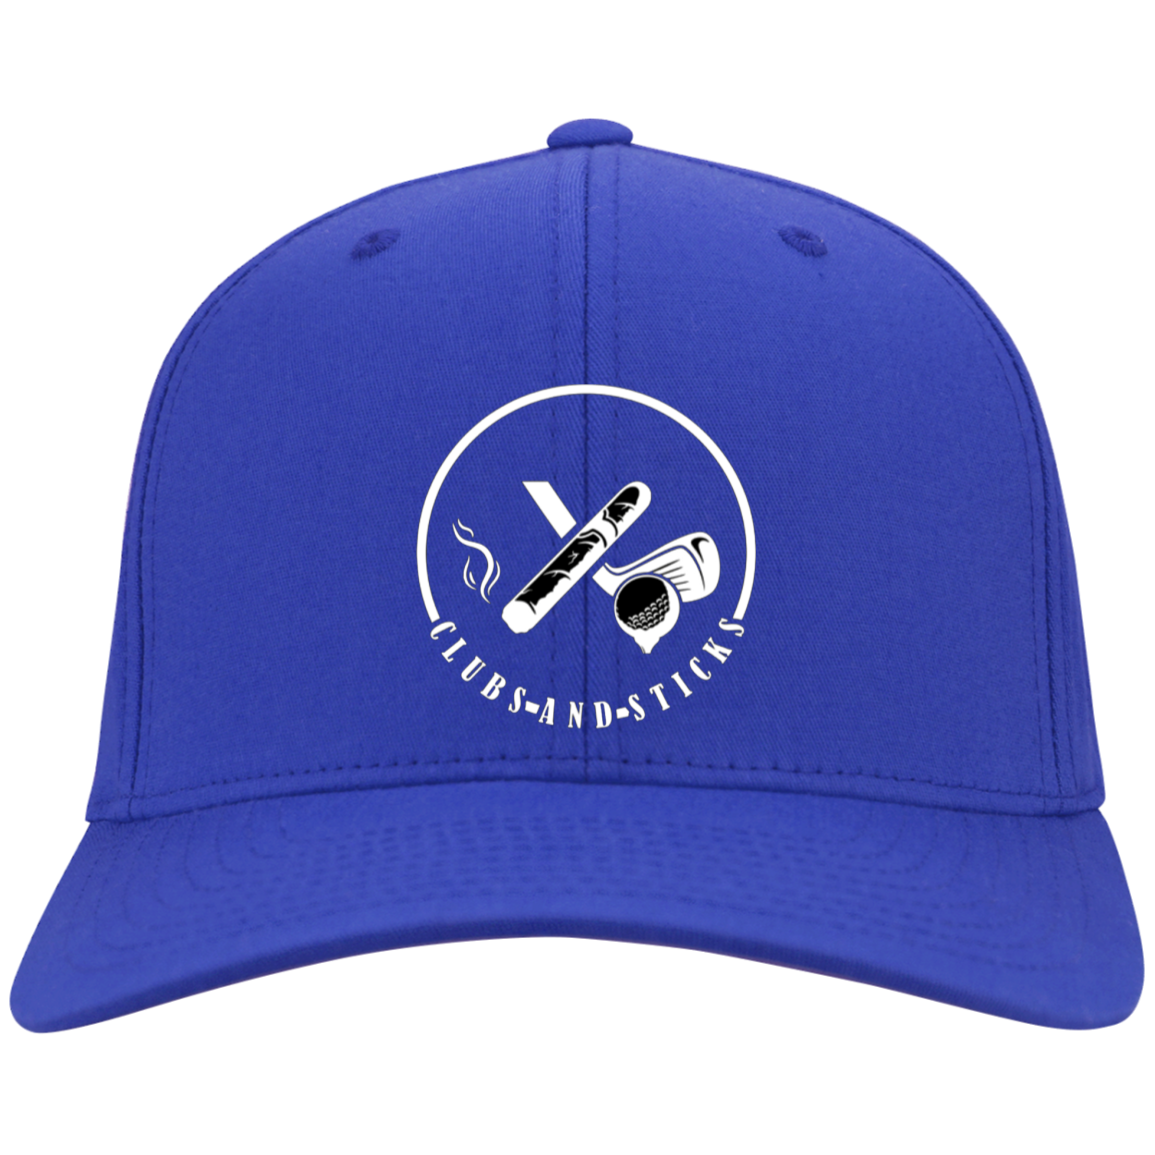 Embroidered Flex Fit Twill Baseball Cap